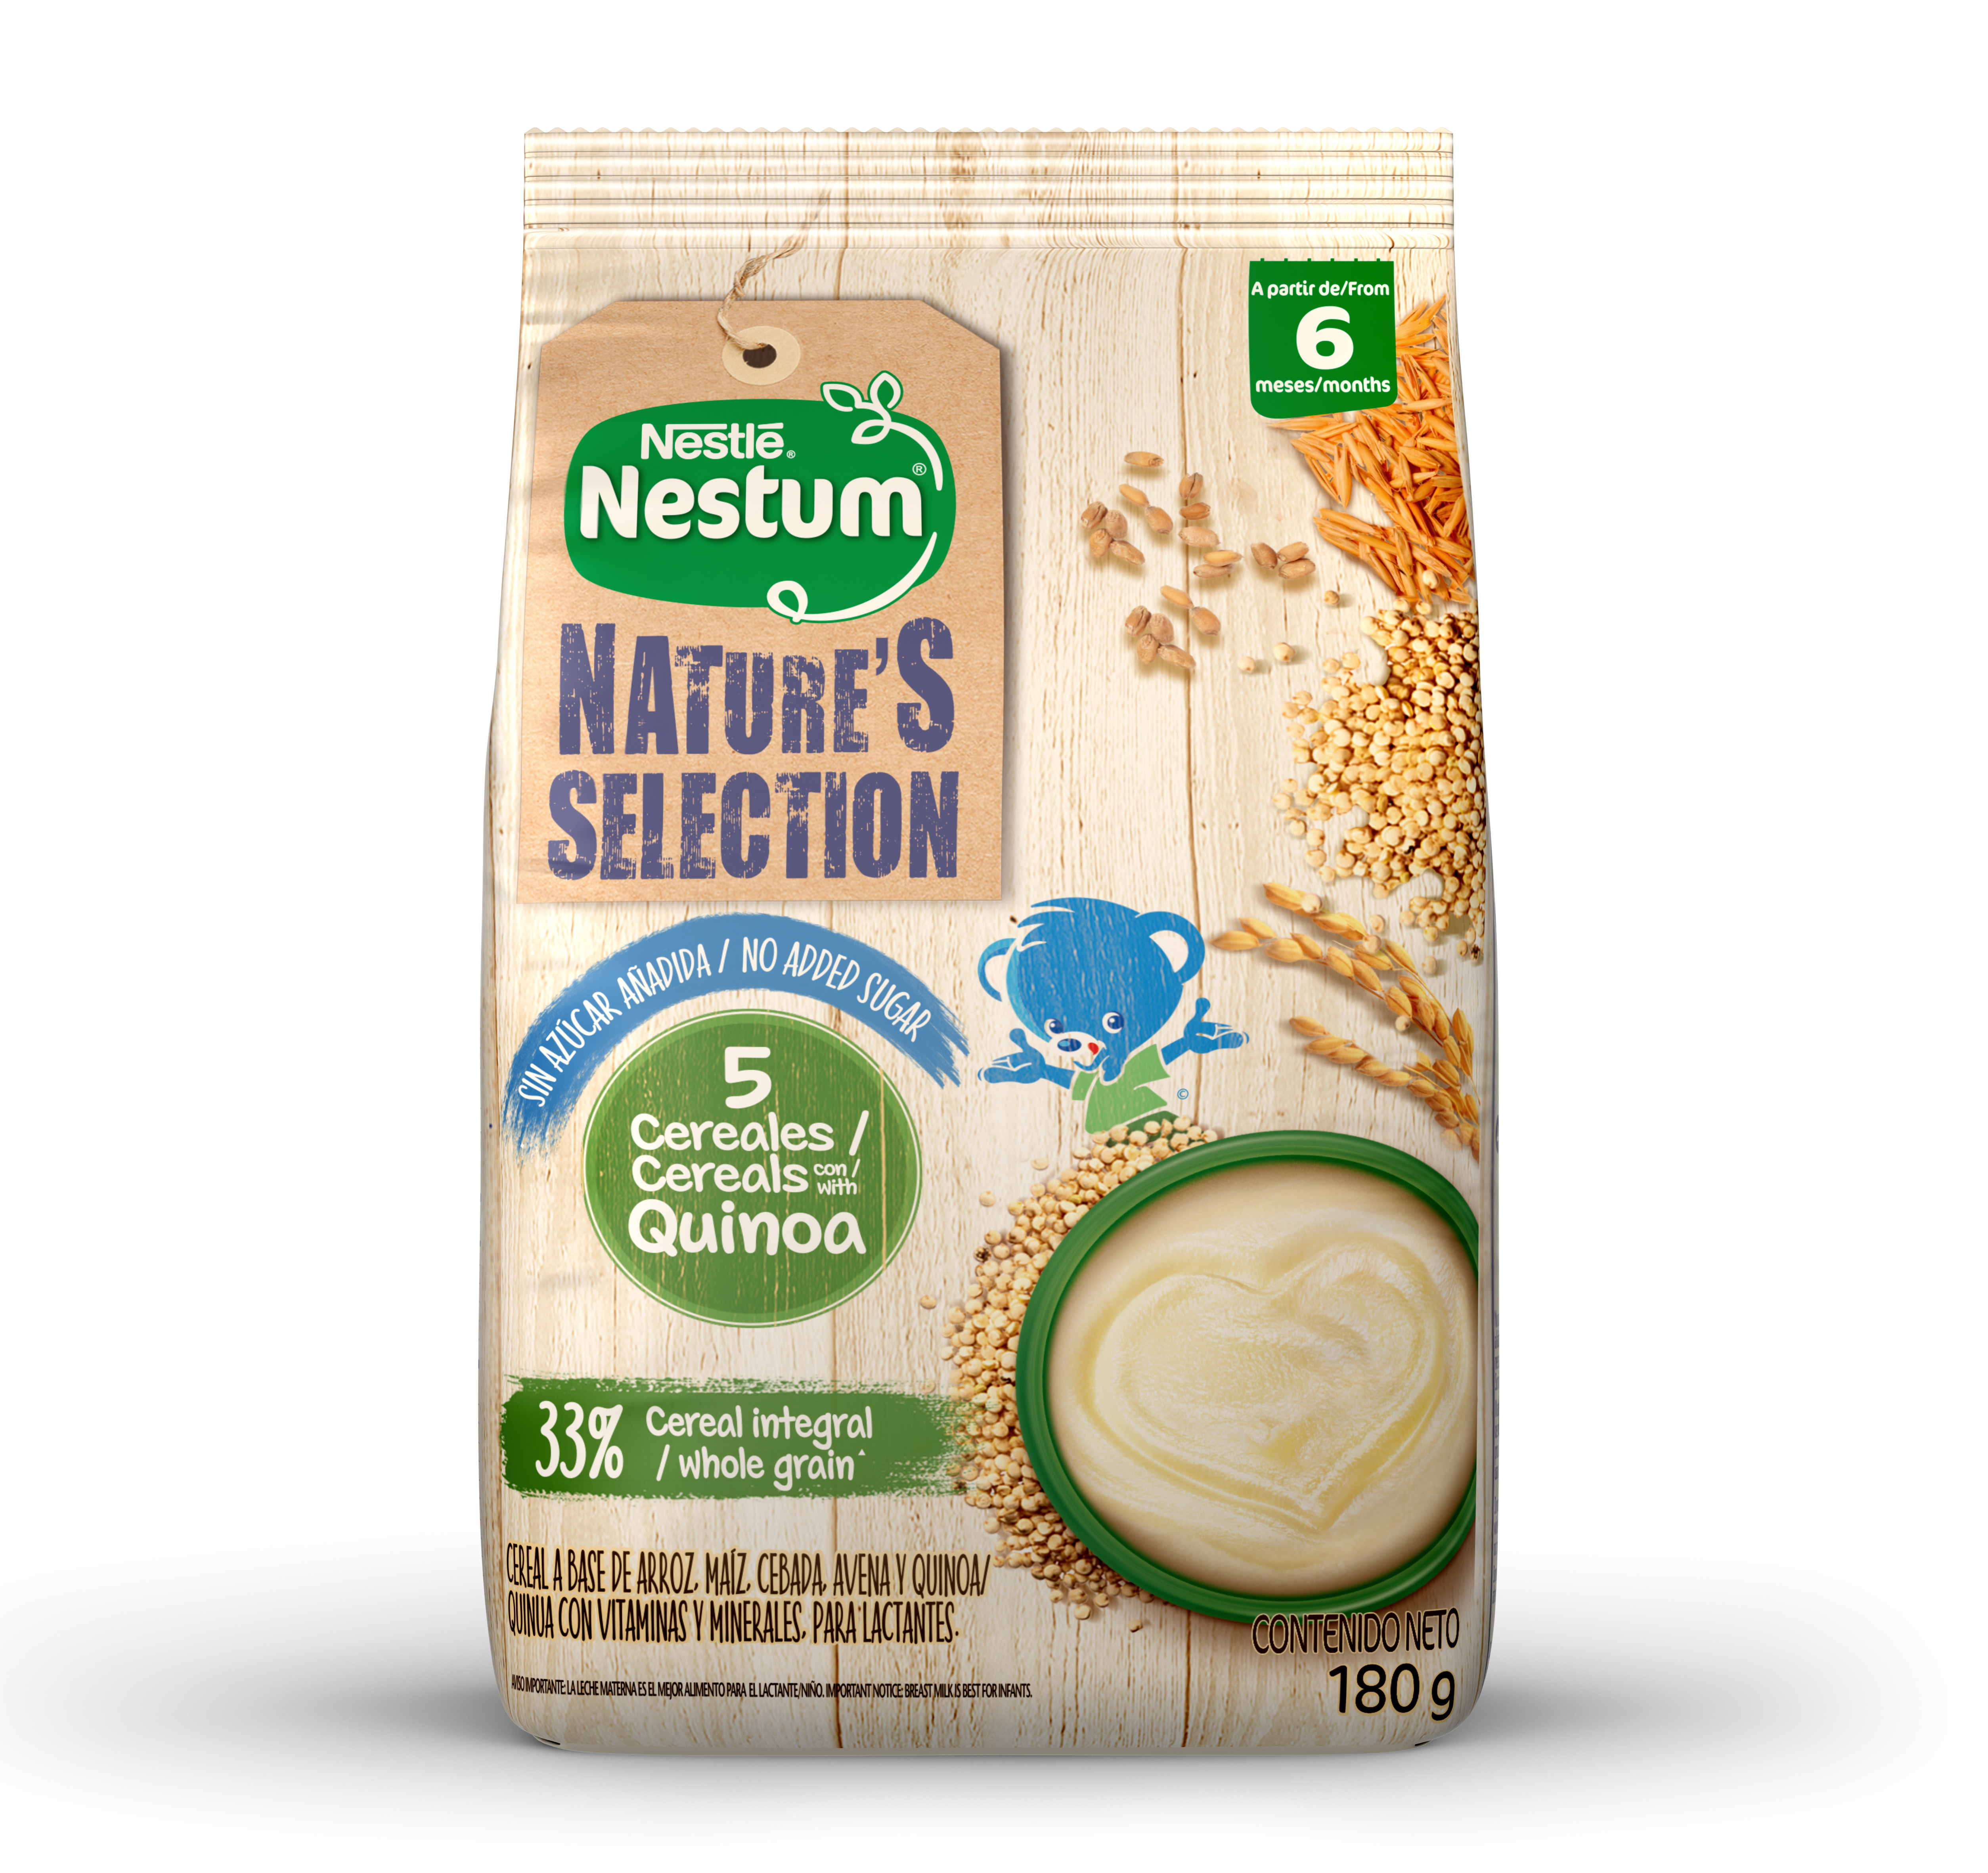 Nestum®: El cereal infantil sin azúcar añadida